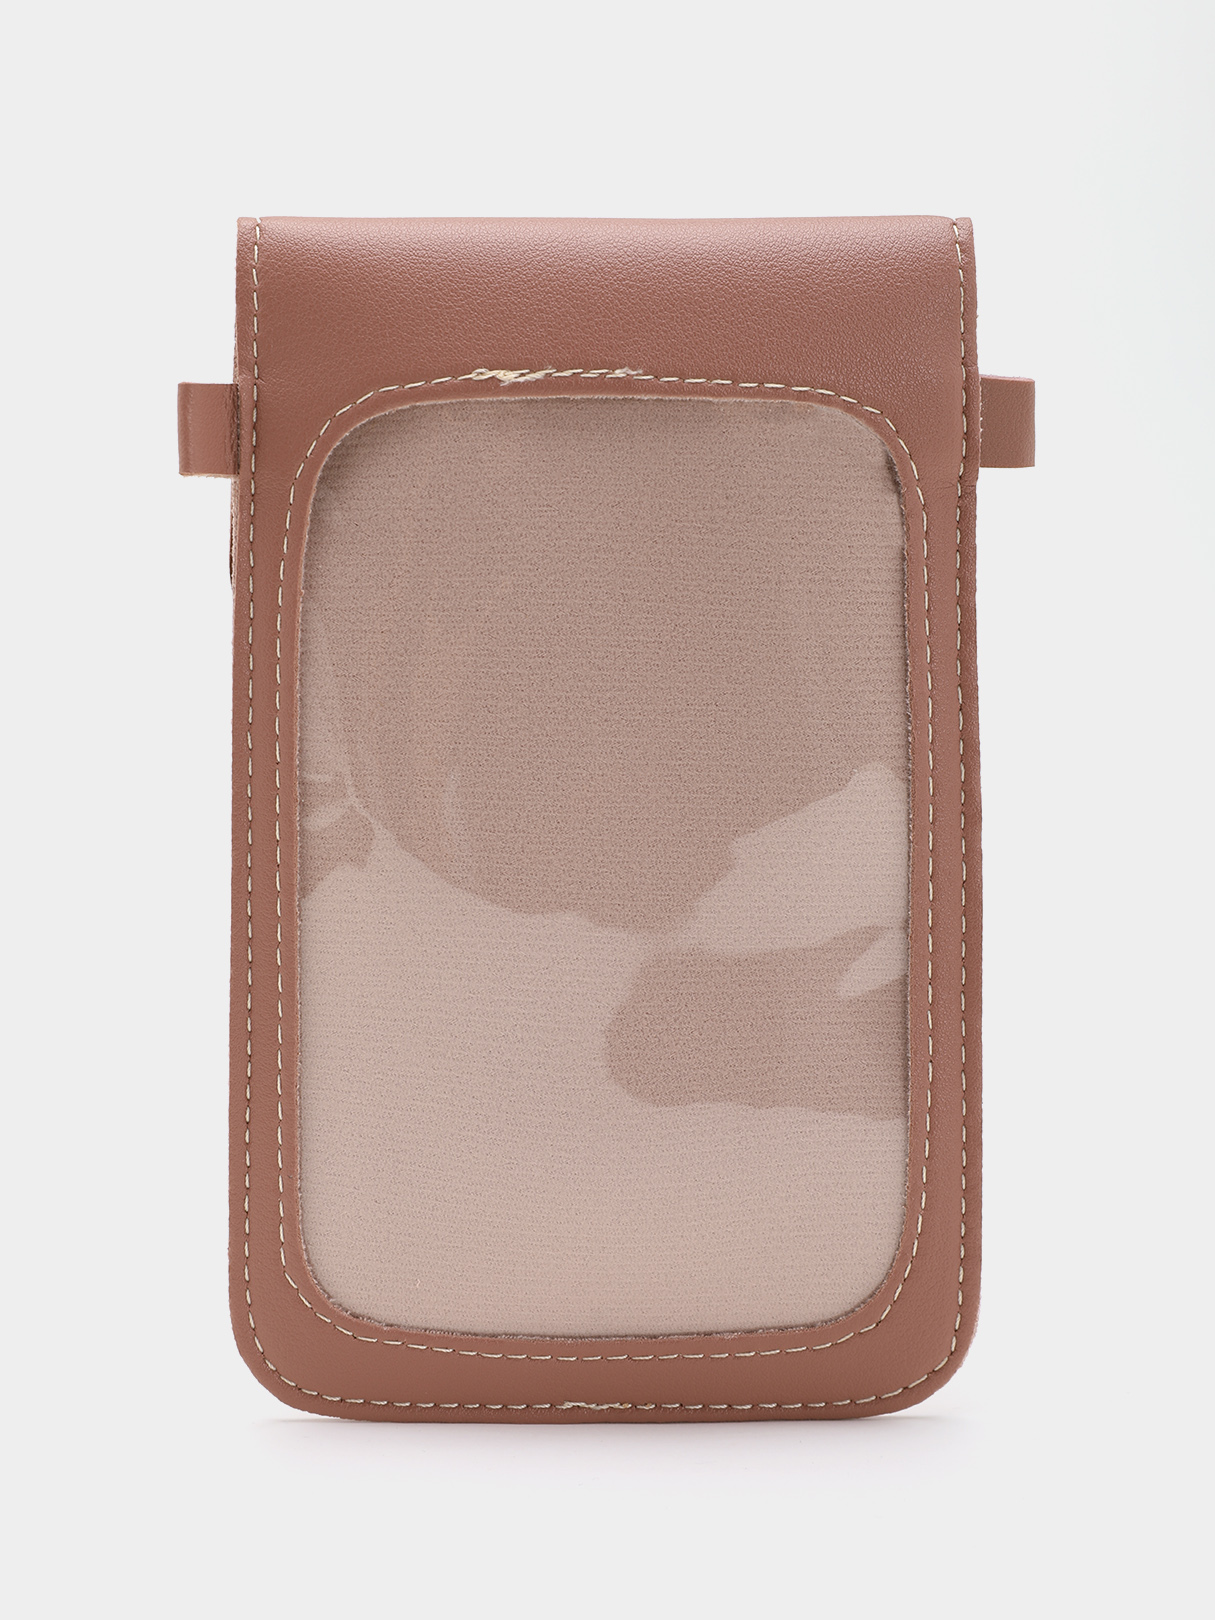 Fashion-Multi-Layer-with-Touch-Screen-Window-Mobile-Phone-Storage-Shoulder-Bag-Handbag-Messenger-Bag-1726496-2